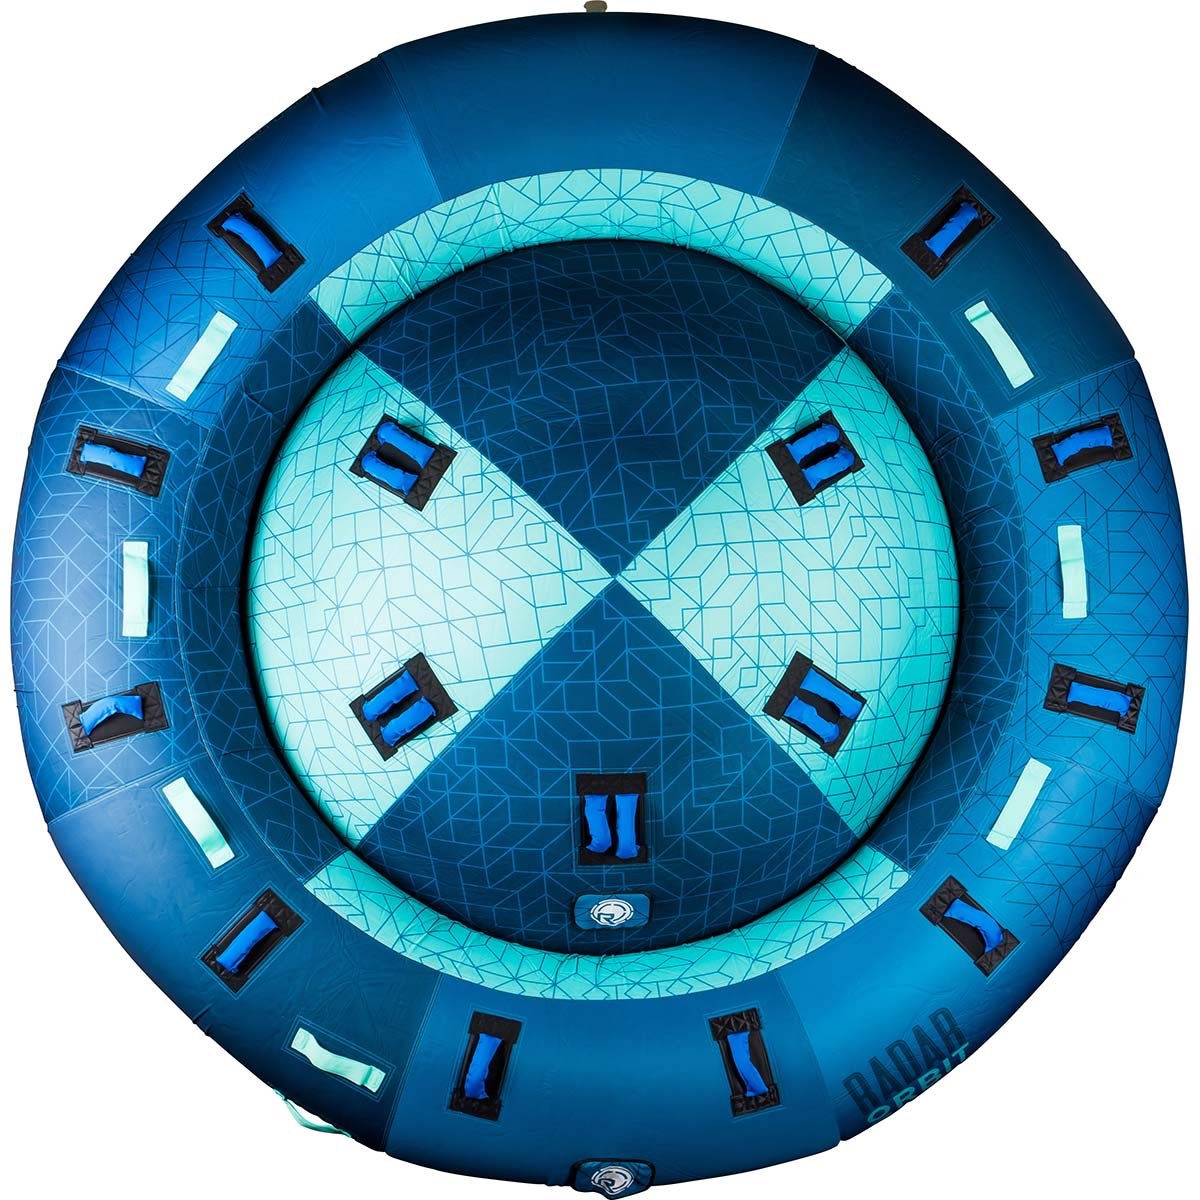 Radar Orbit 4 Person Tube in Teal / Blue - BoardCo